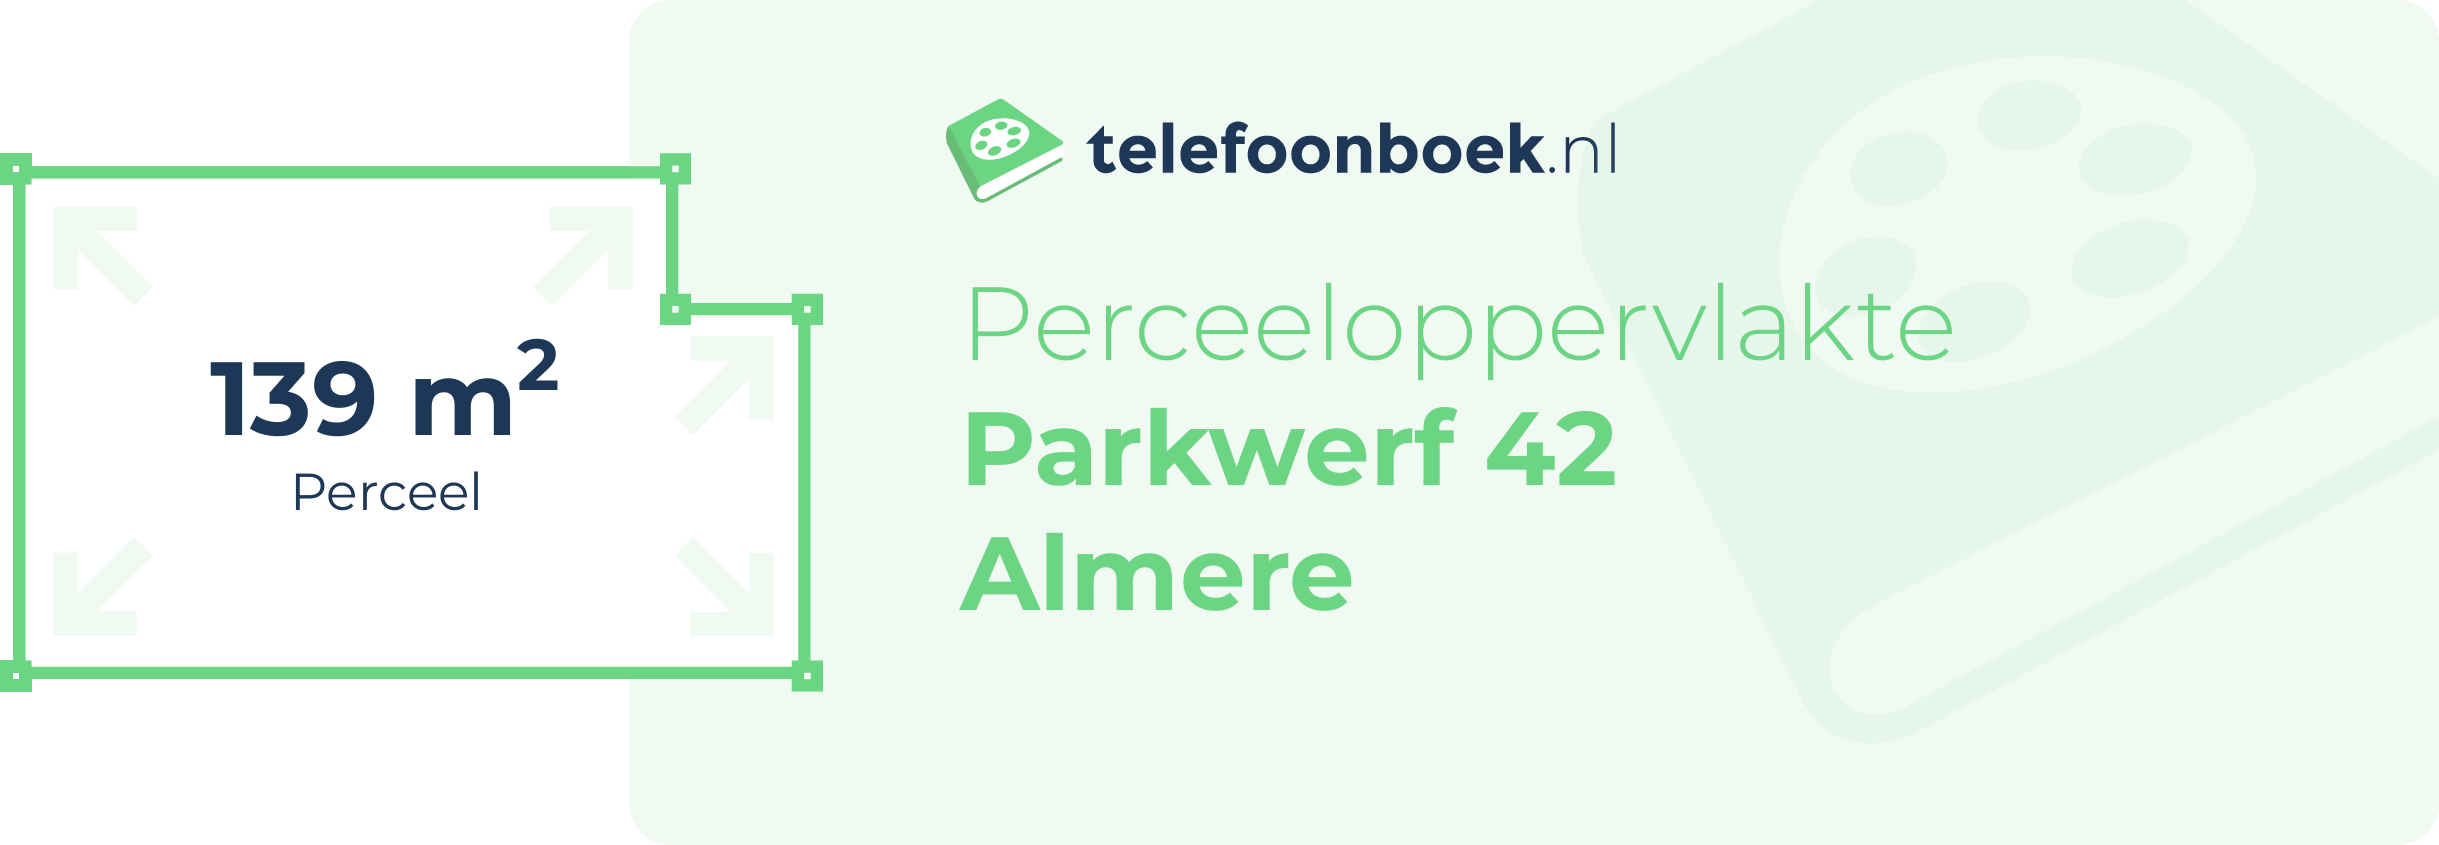 Perceeloppervlakte Parkwerf 42 Almere